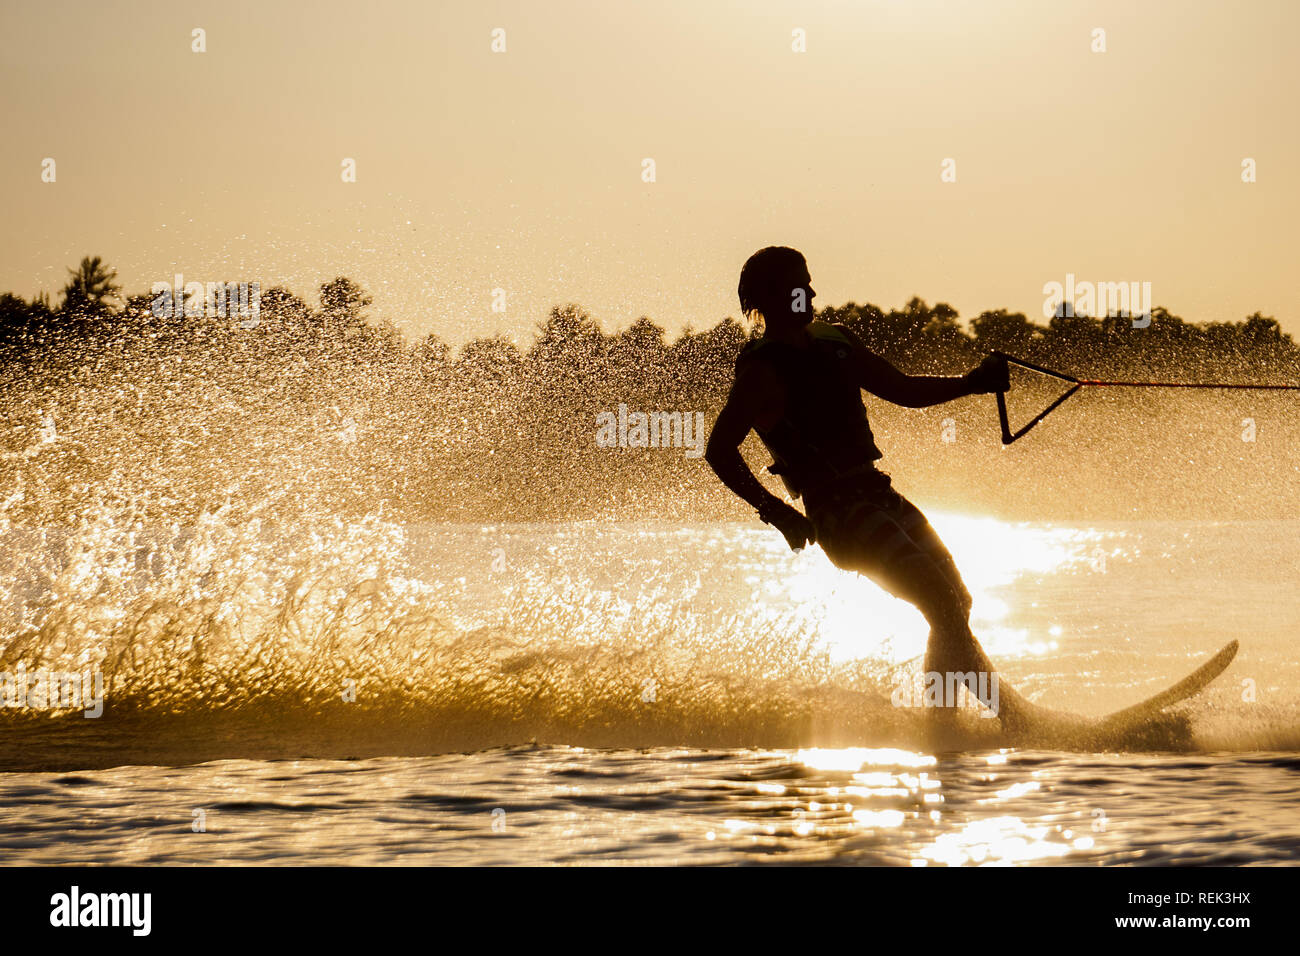 Water Skiing during sunset Stock Photo